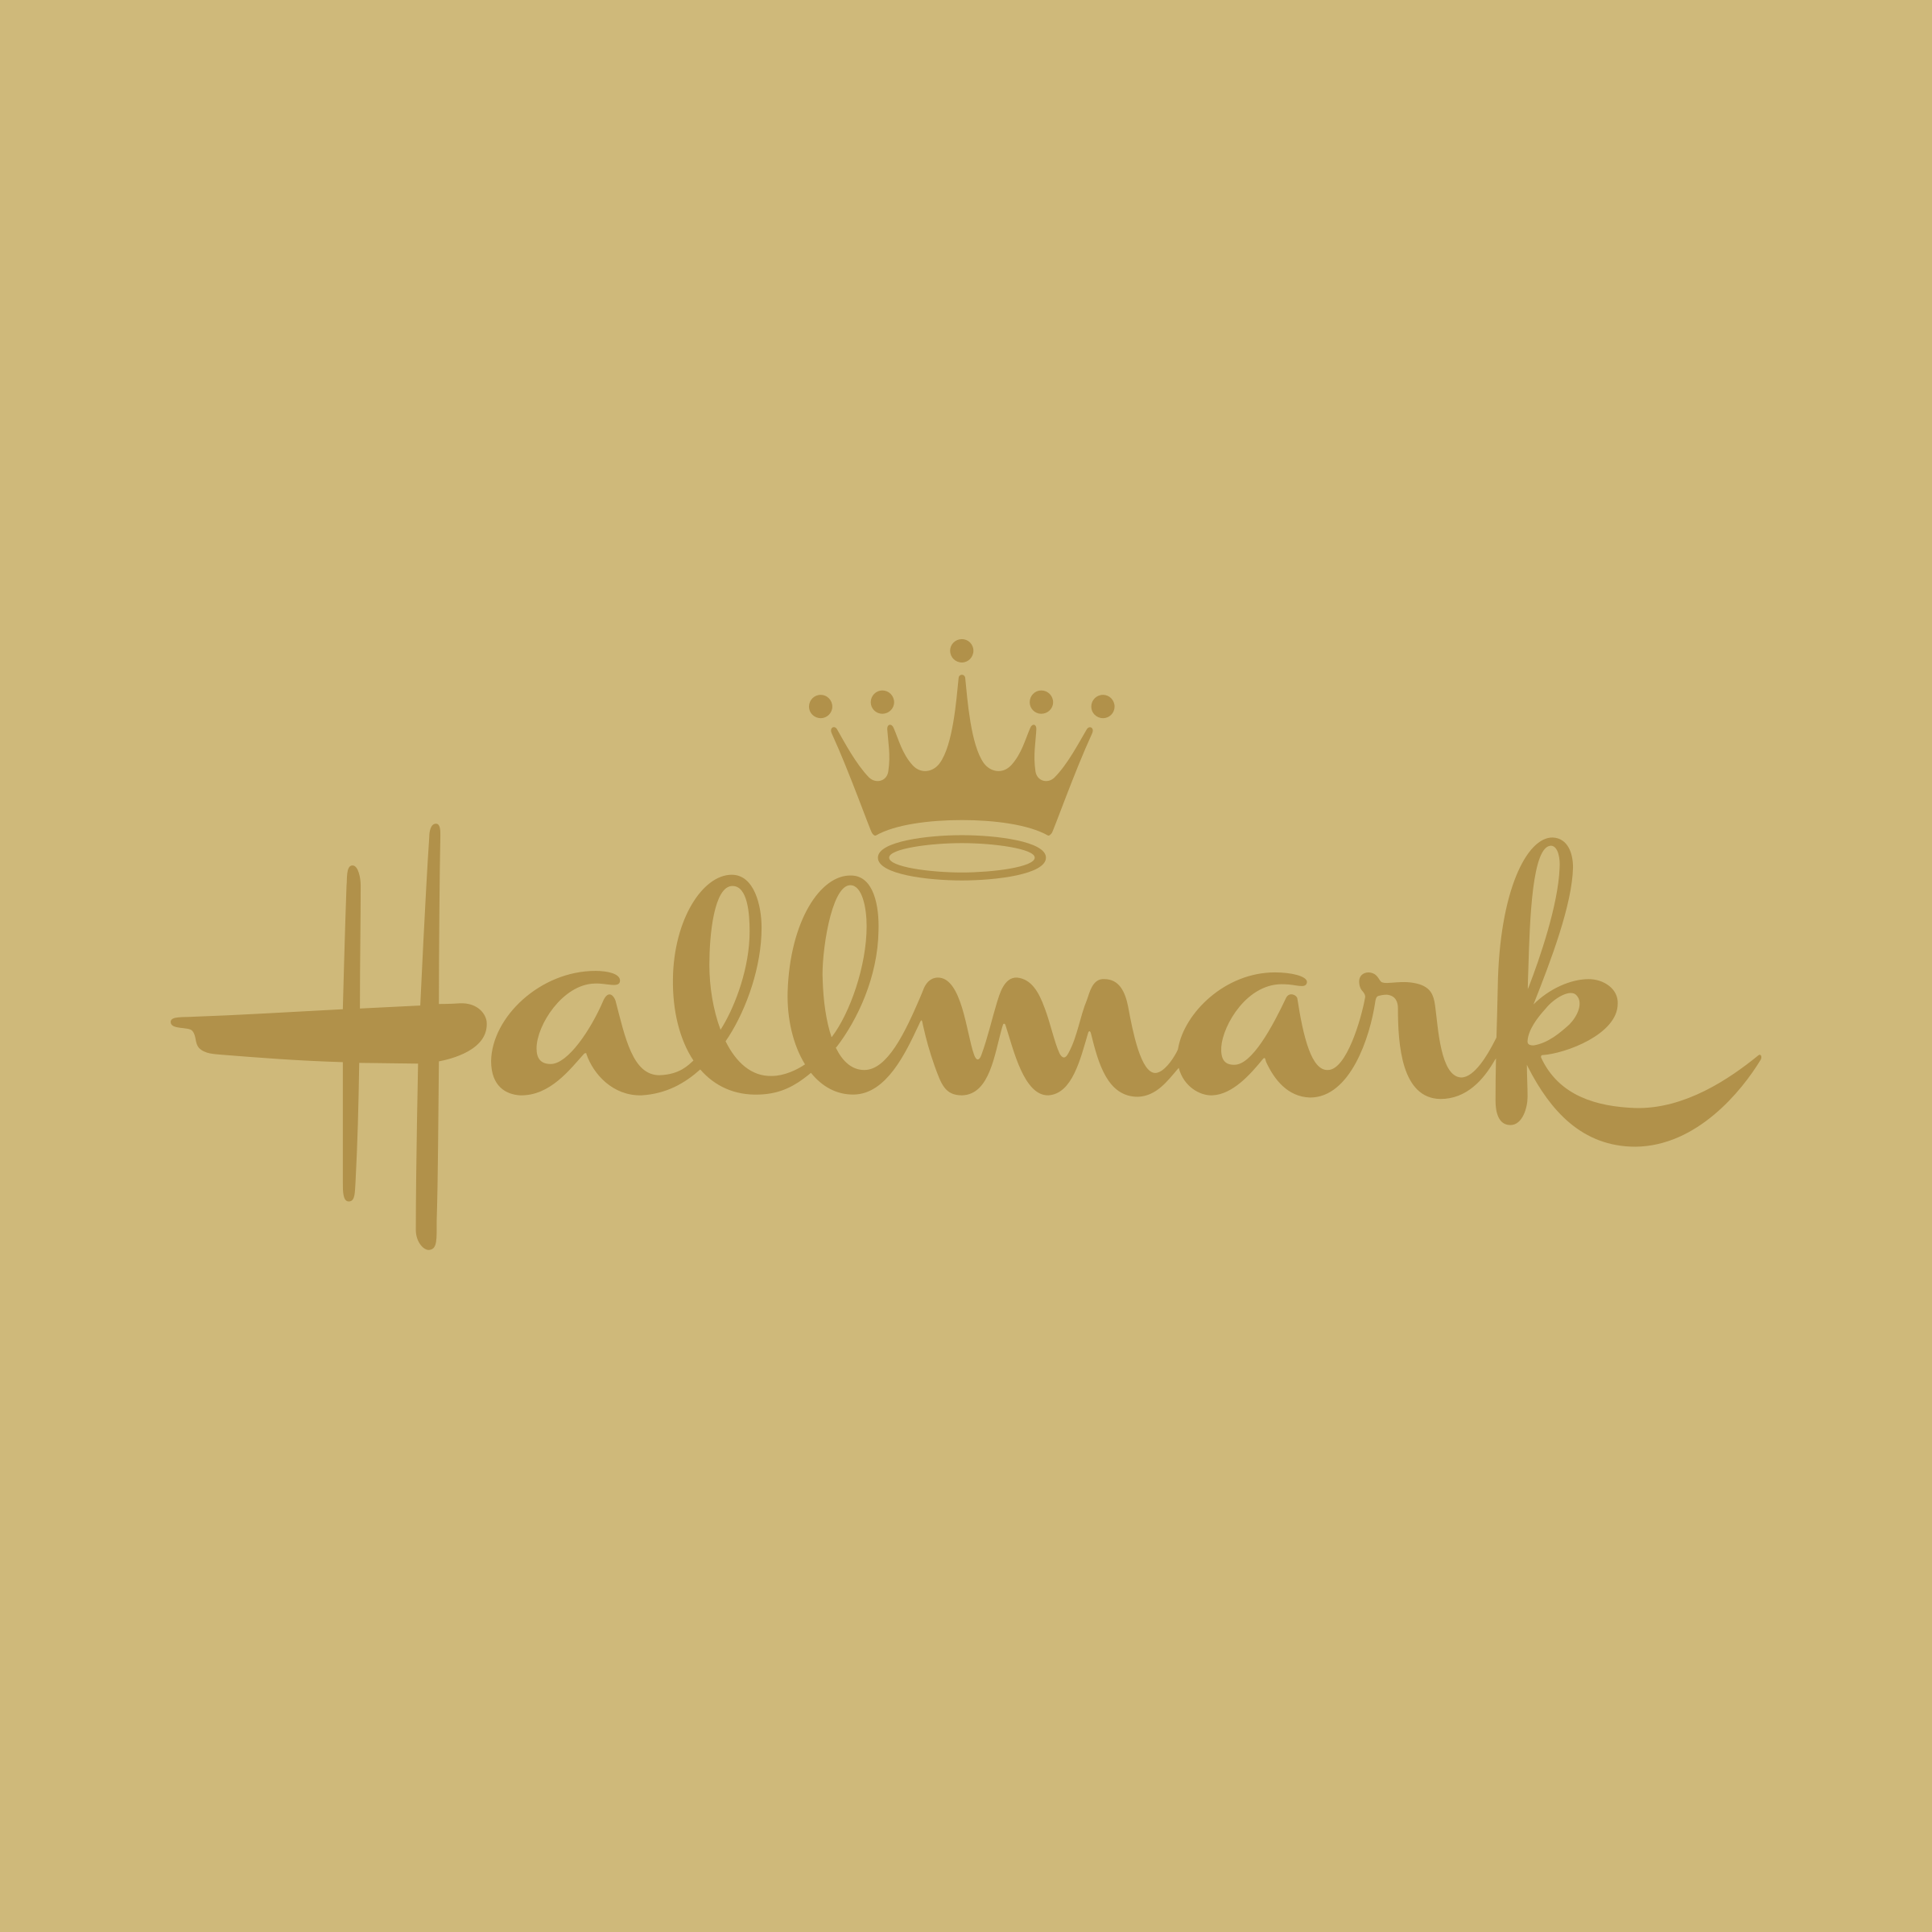 Hallmark Logo - Hallmark Logo PNG Transparent & SVG Vector